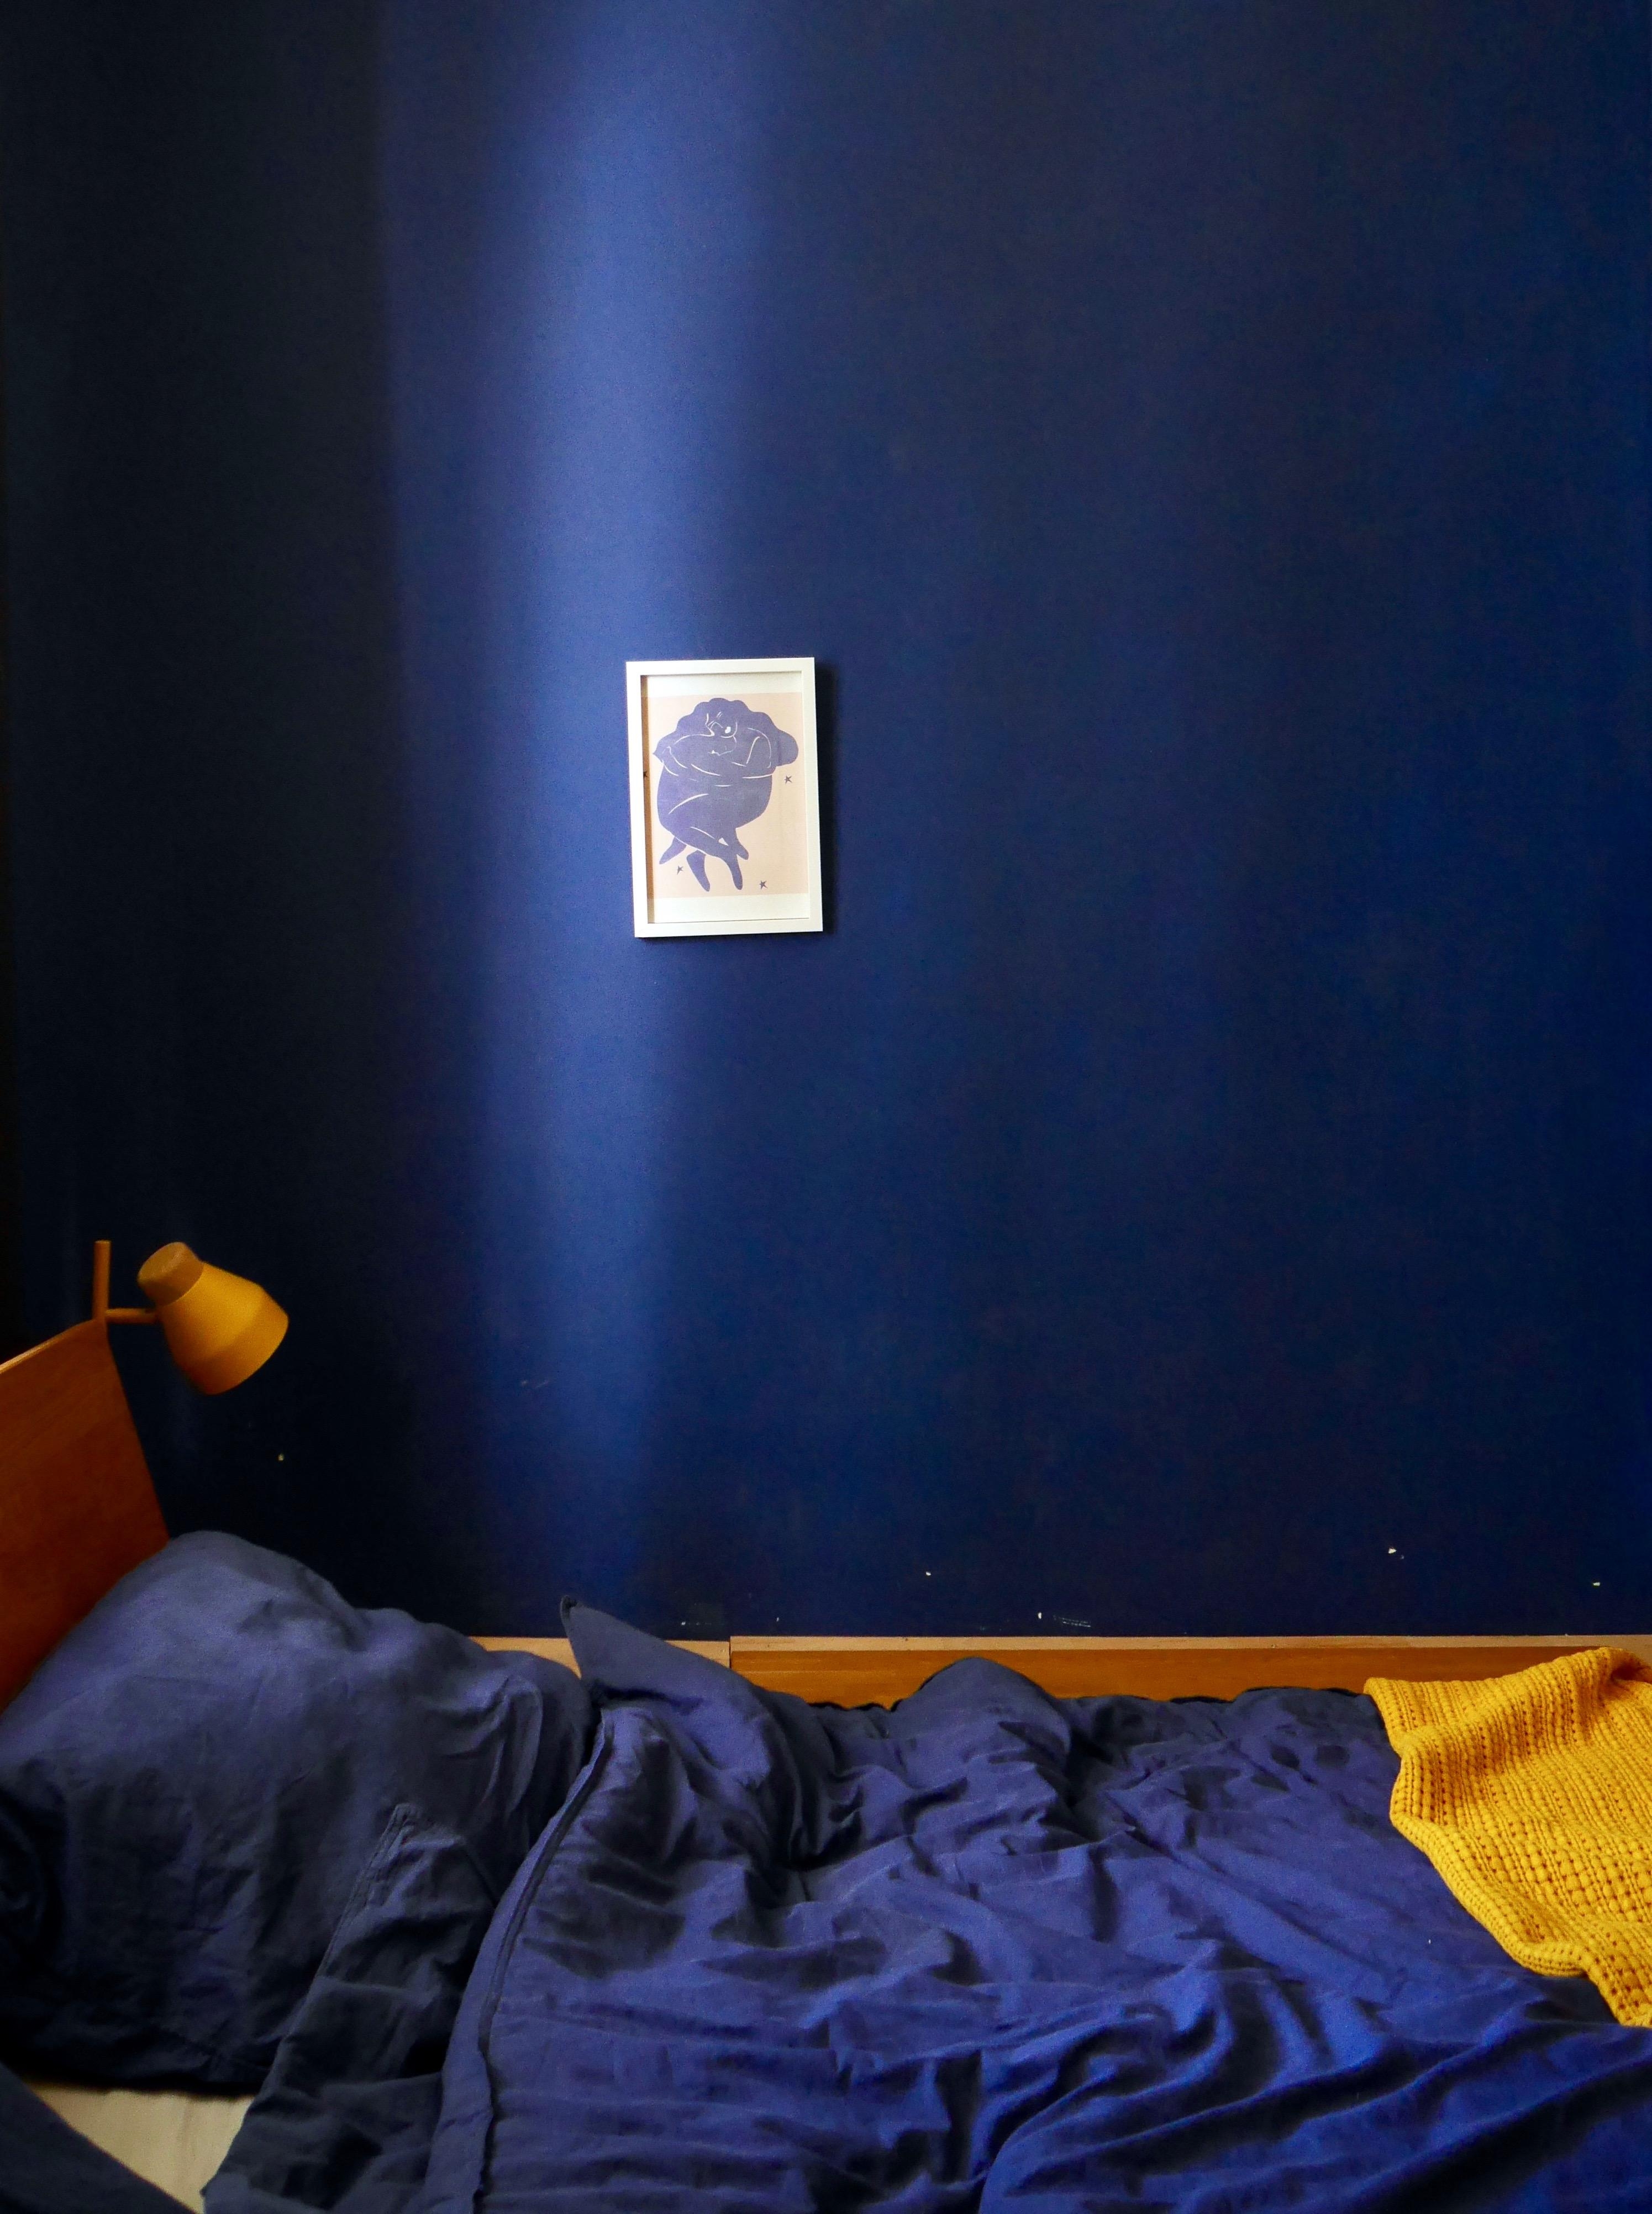 #schlafzimmer #bedroomviews #lazysamstag